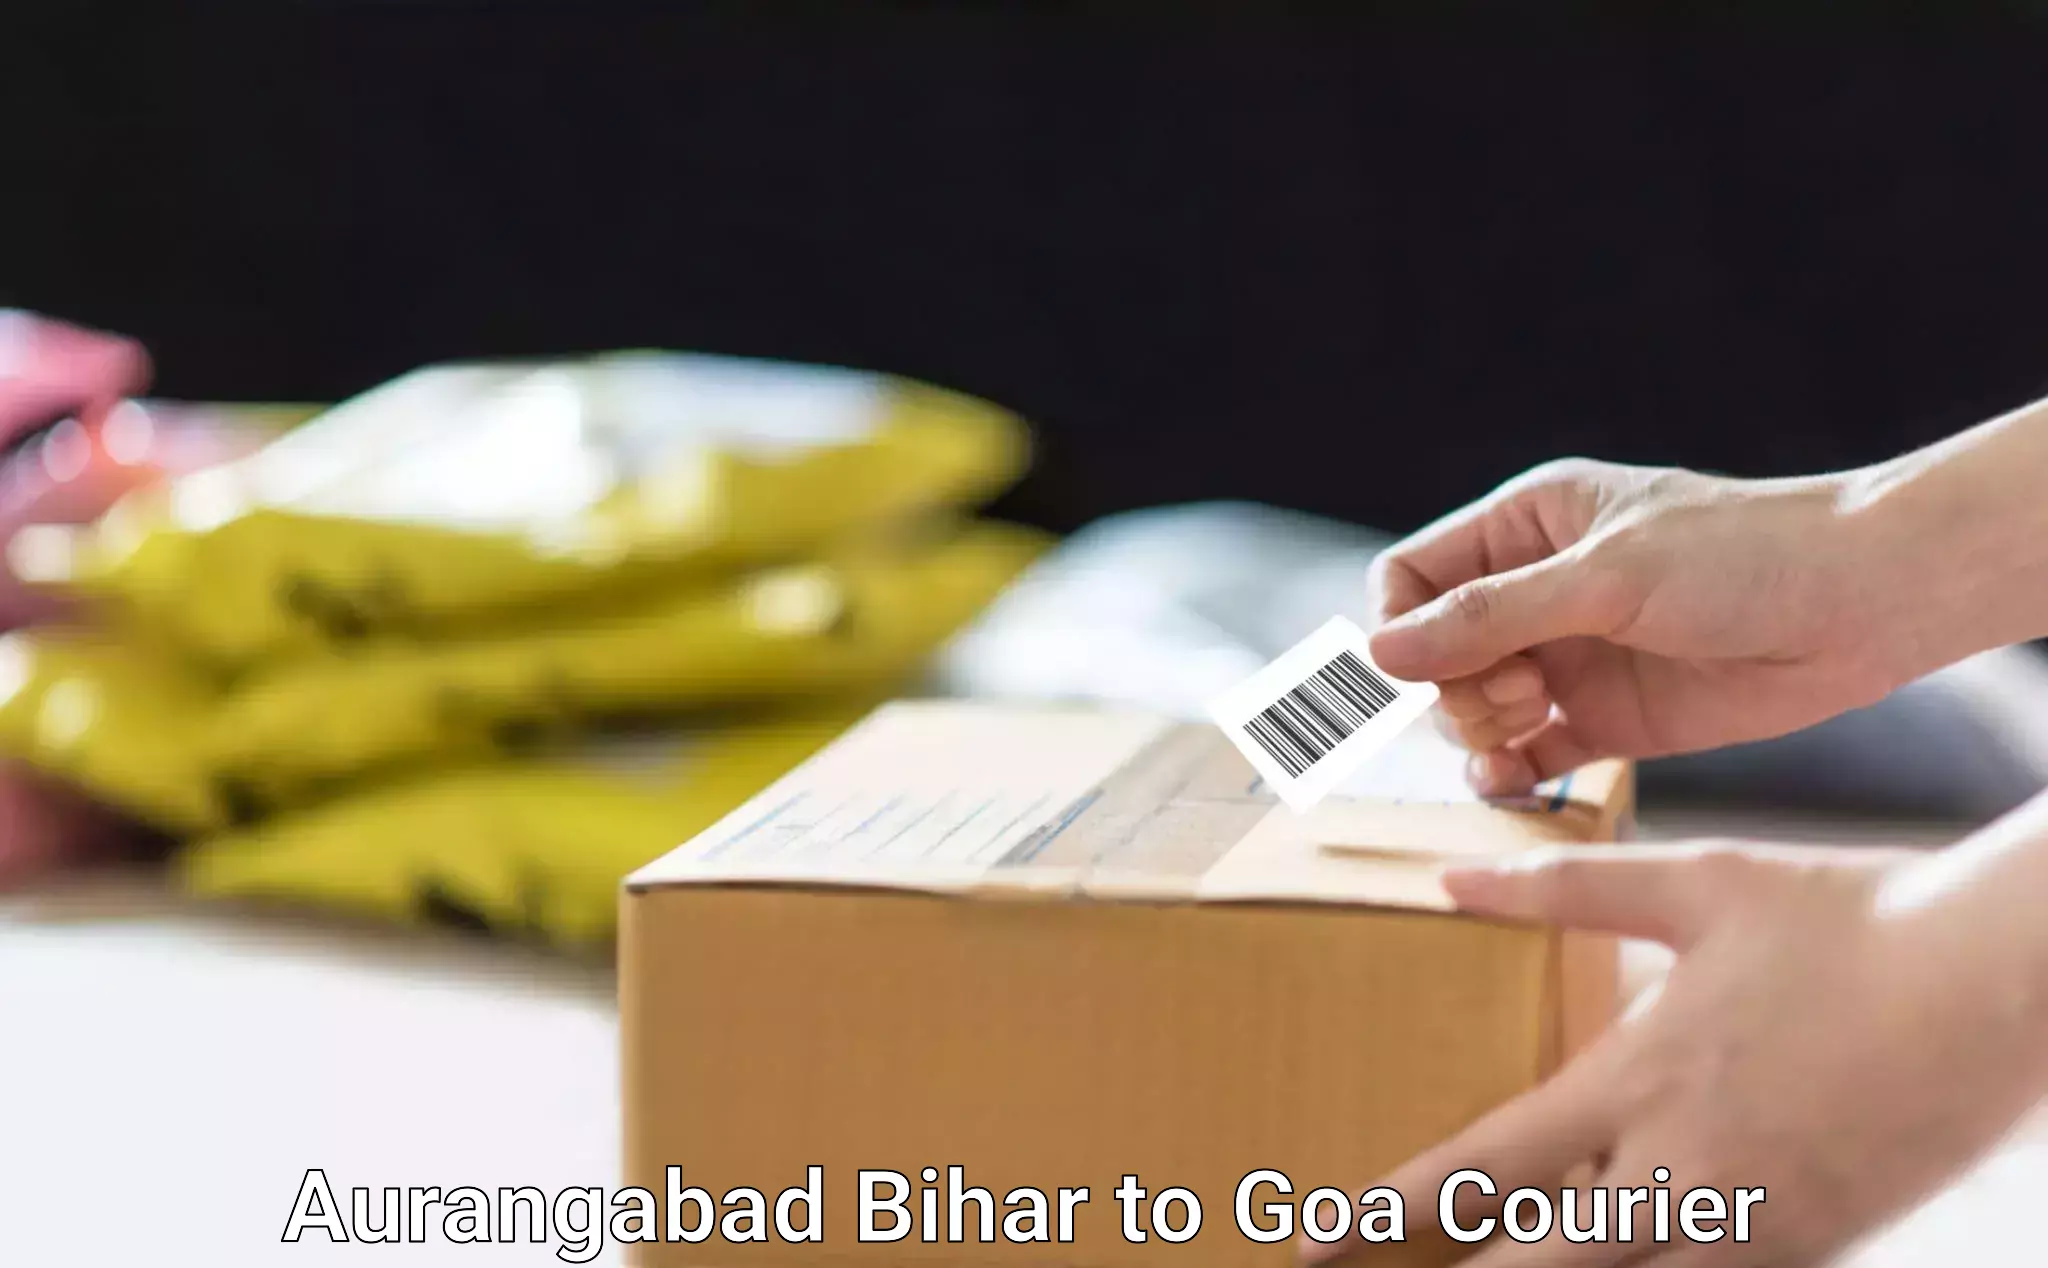 Professional relocation services Aurangabad Bihar to Goa